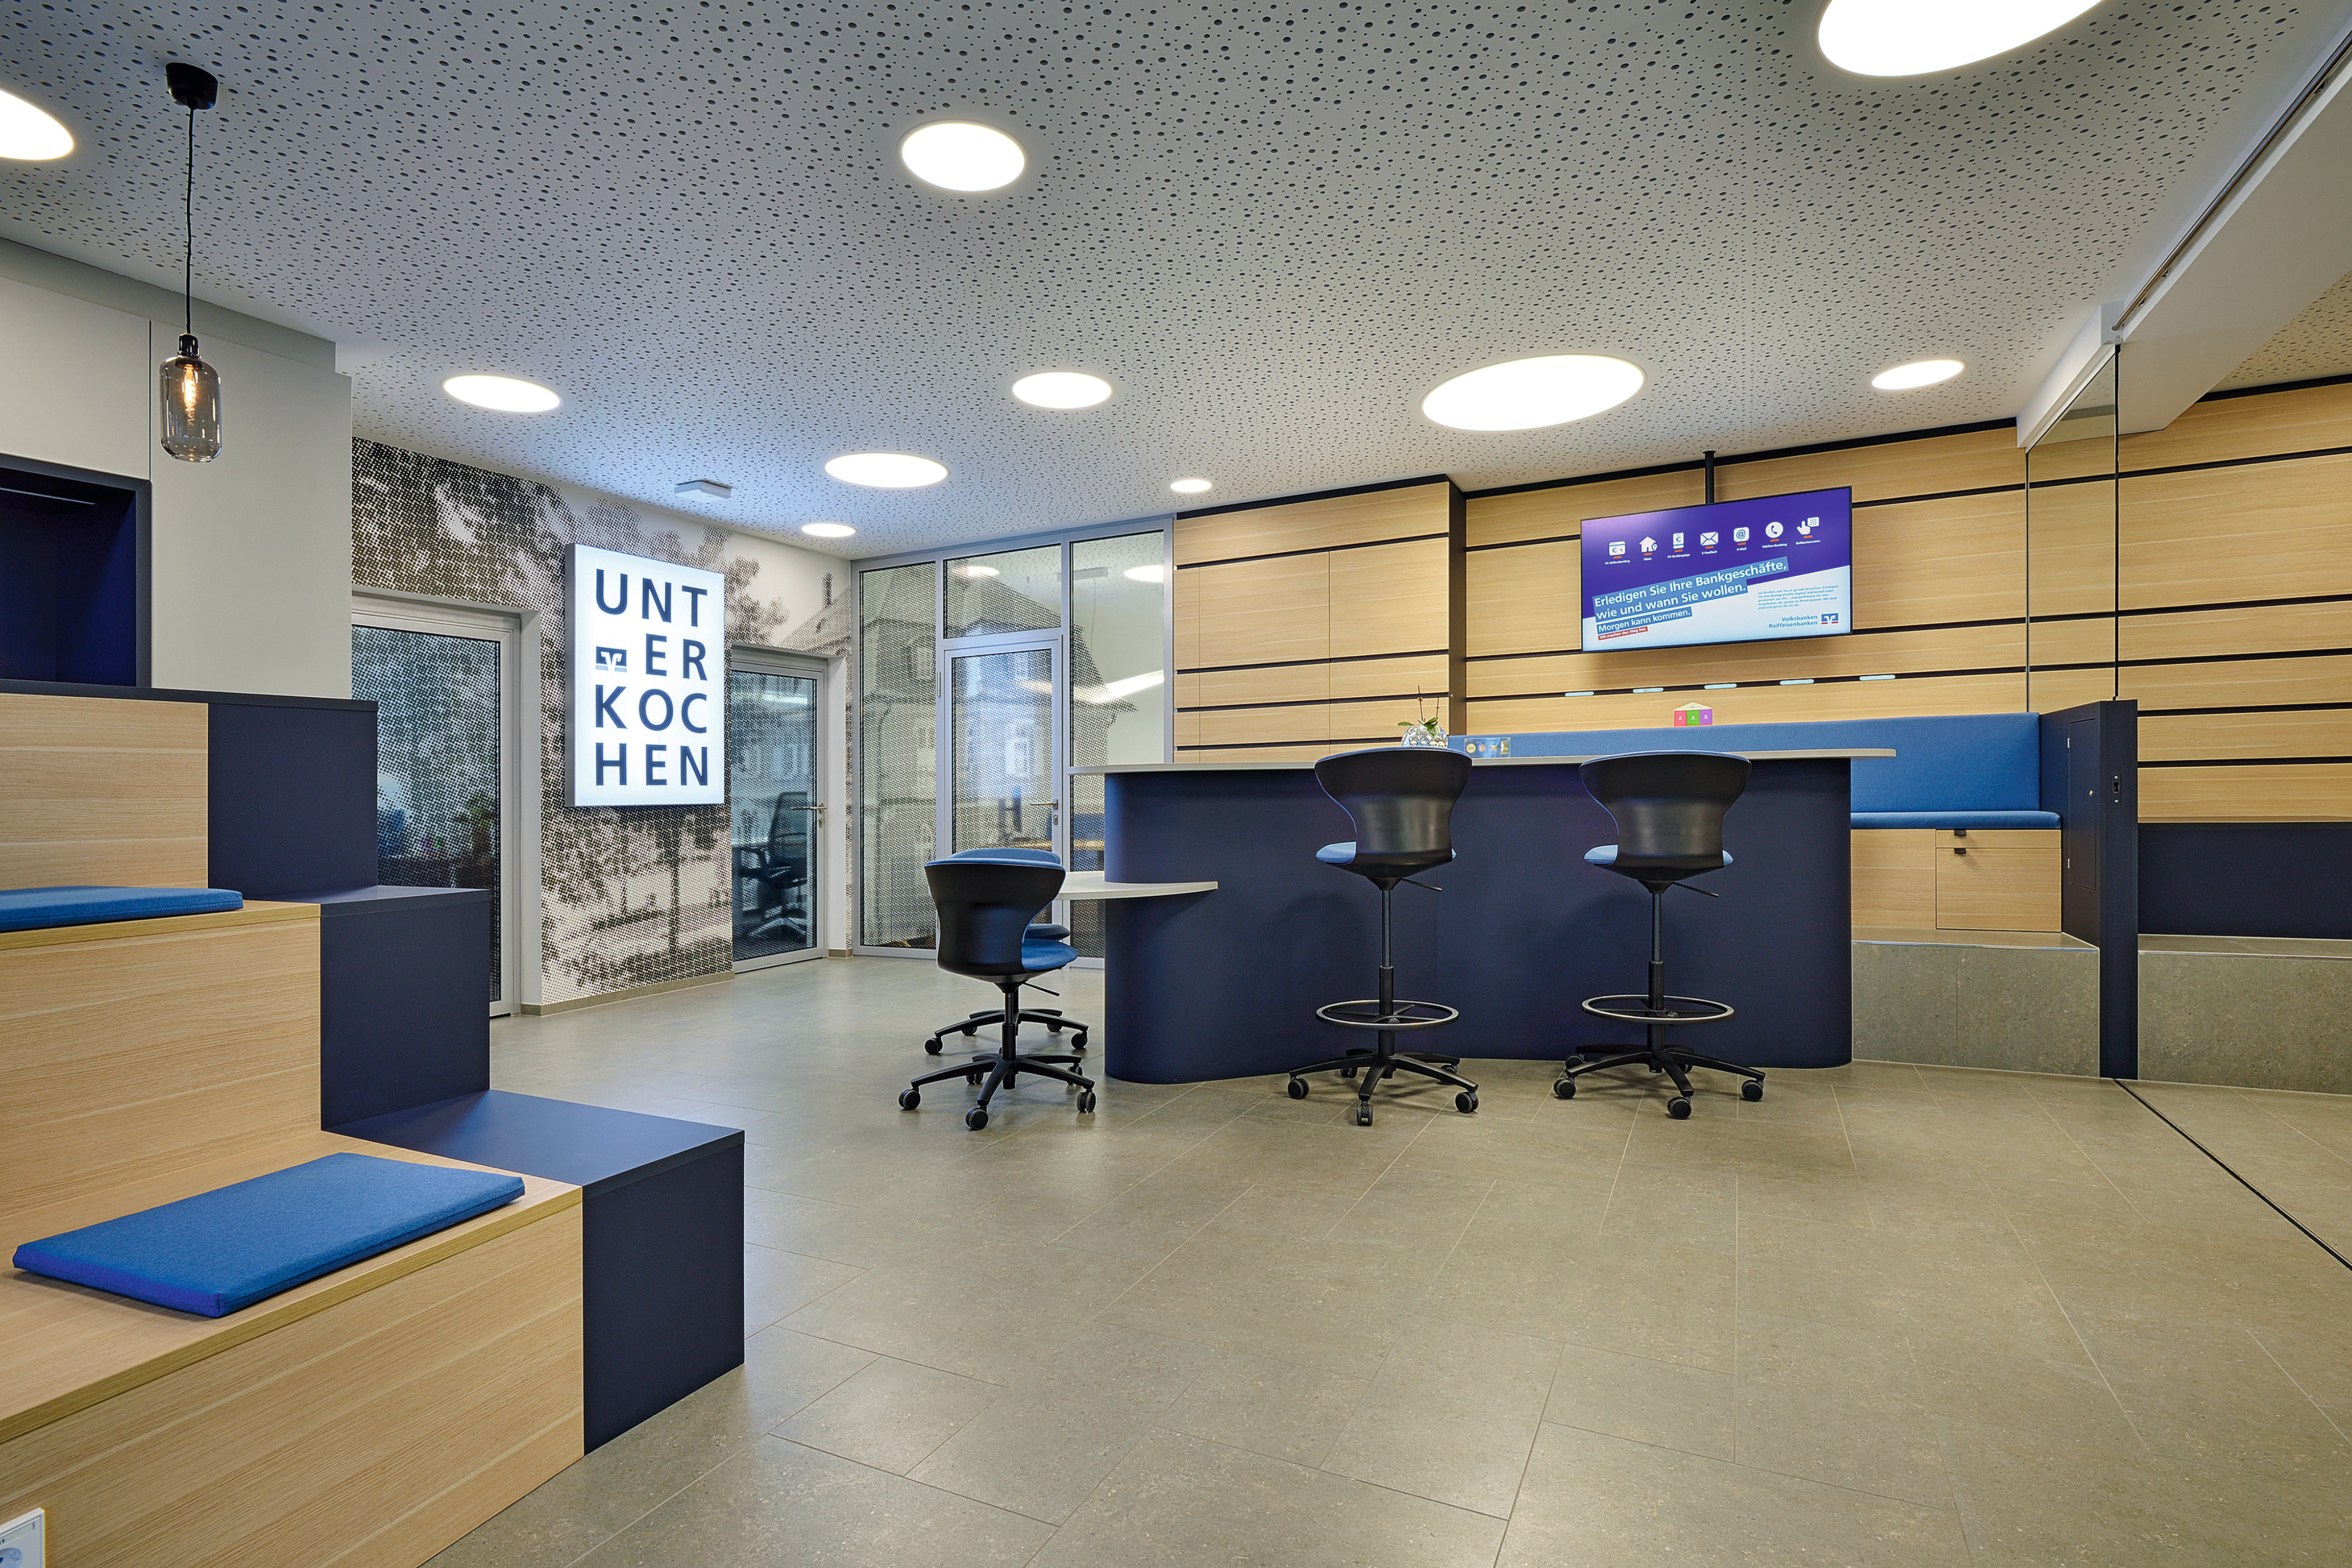 The inviting reception area in a harmonious combination of indigo blue, light grey and oak.